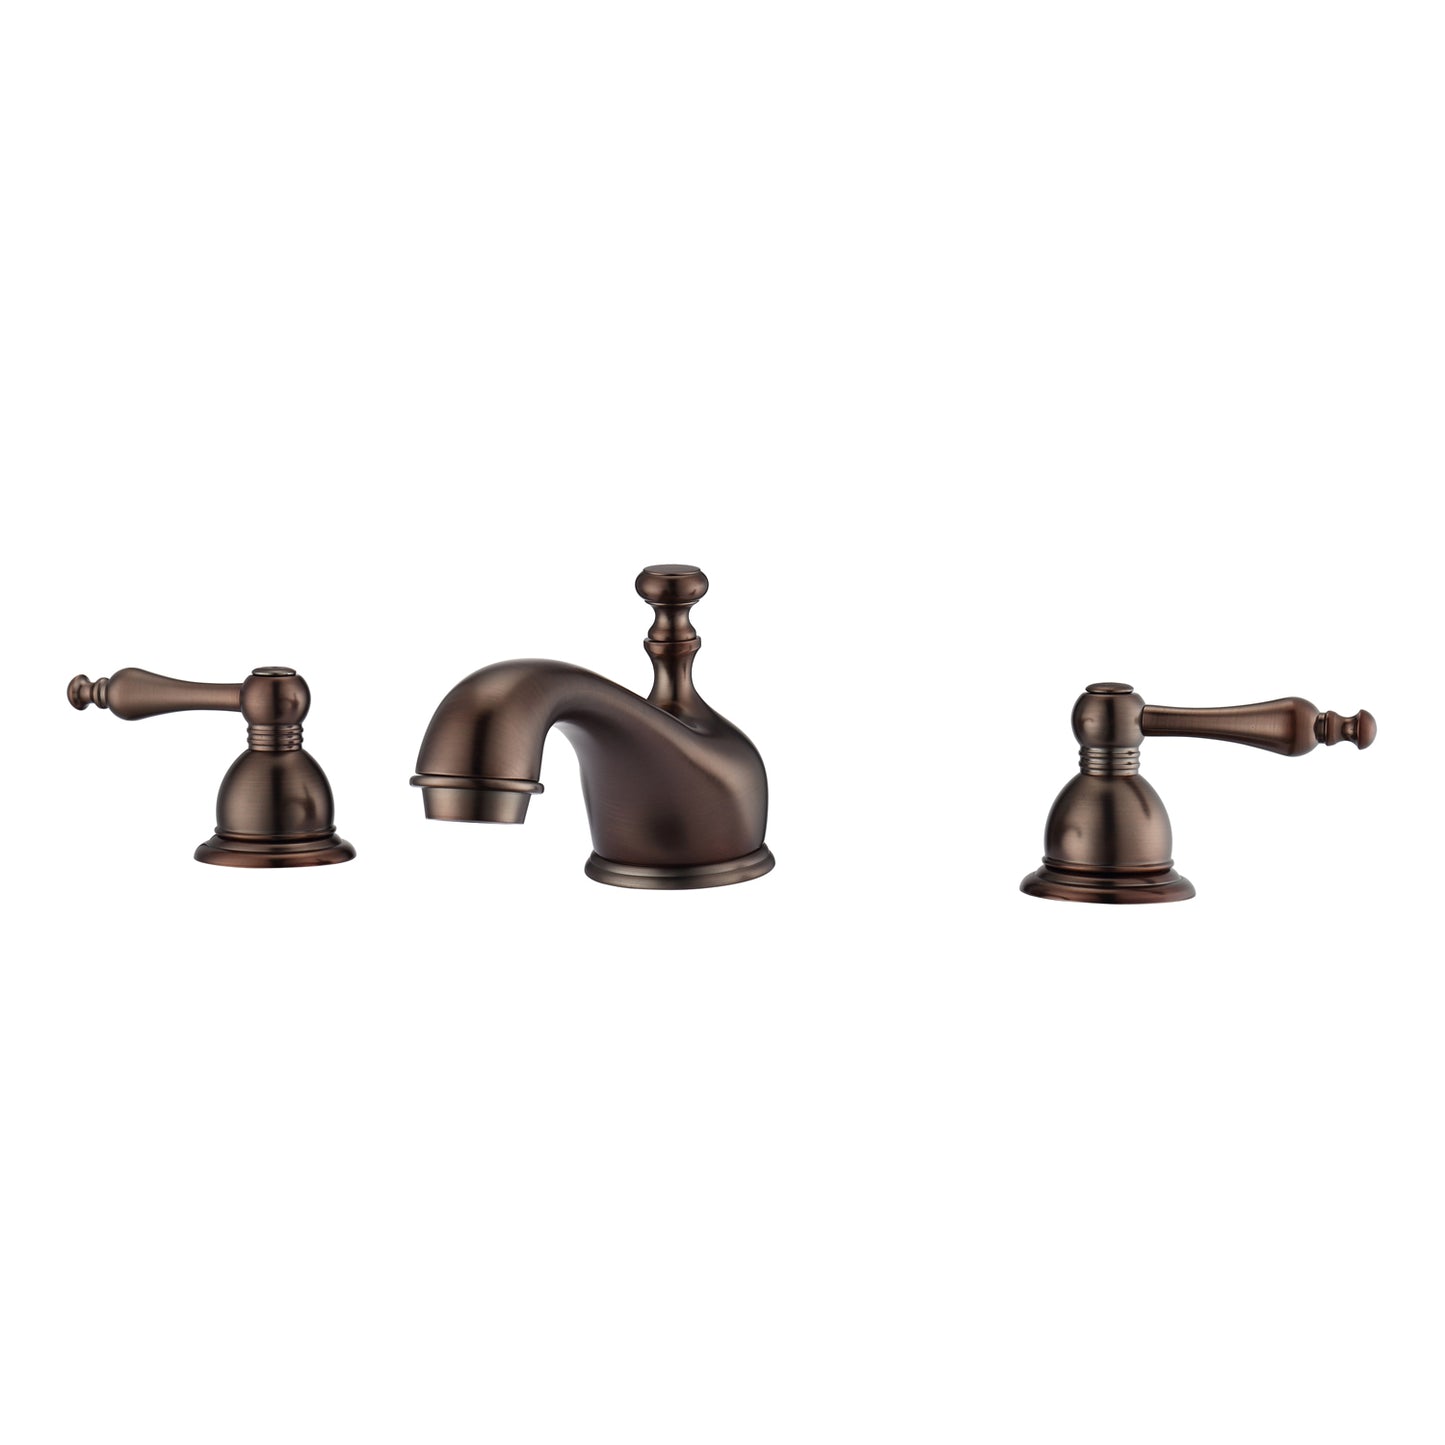 Marsala 8" Widespread Oil Rubbed Bronze Bathroom Faucet with Metal Lever Handles